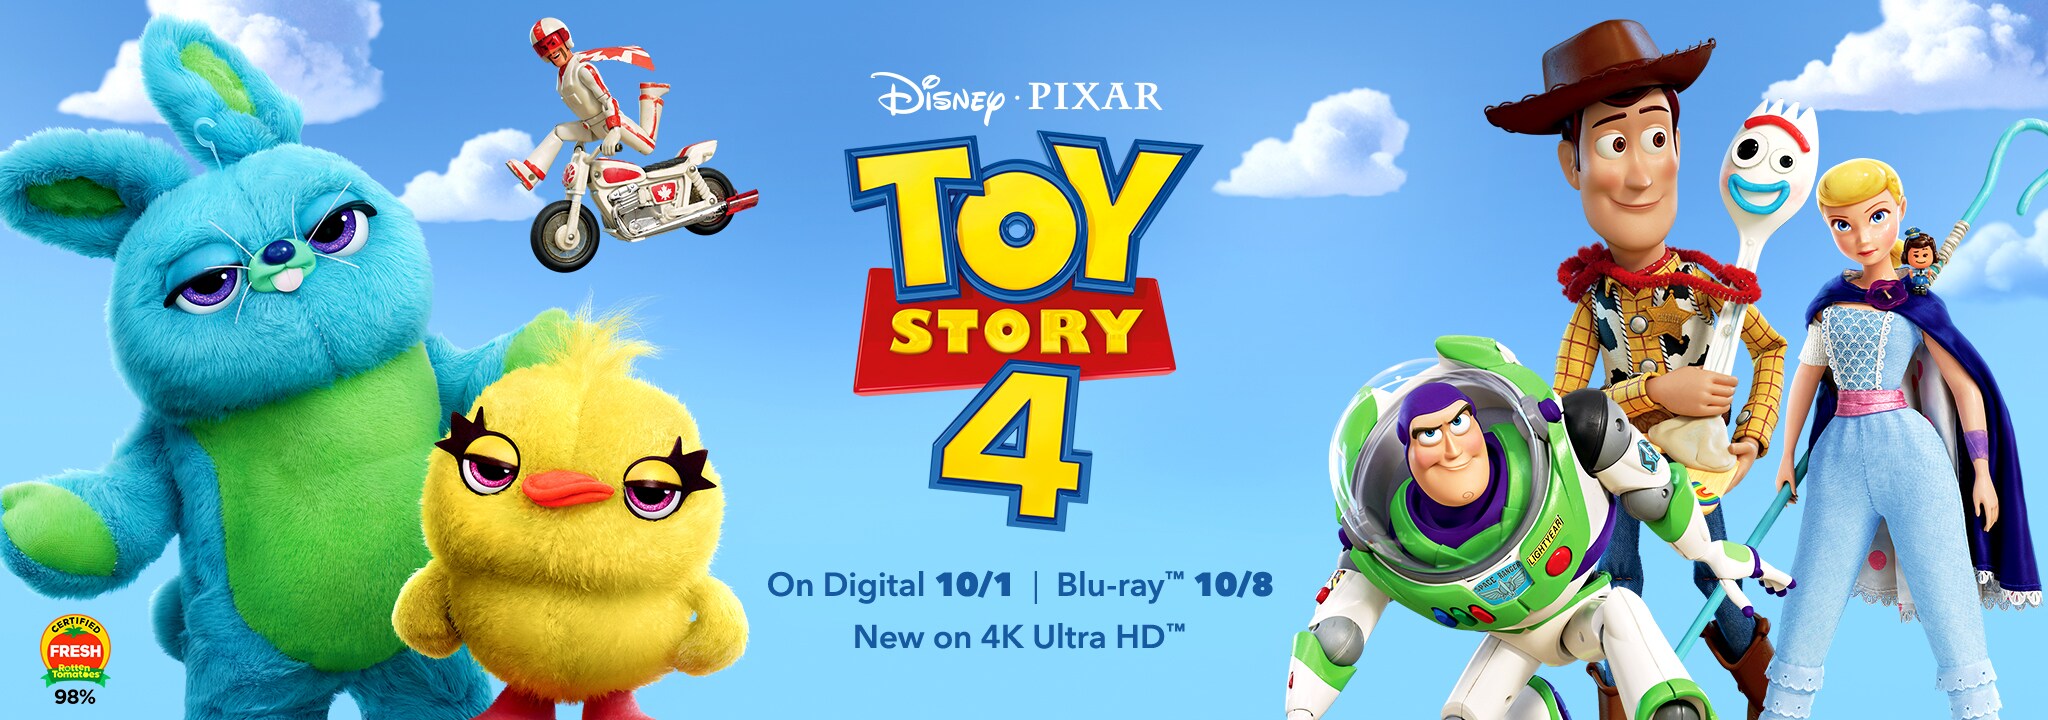 toy story 1 full movie dailymotion